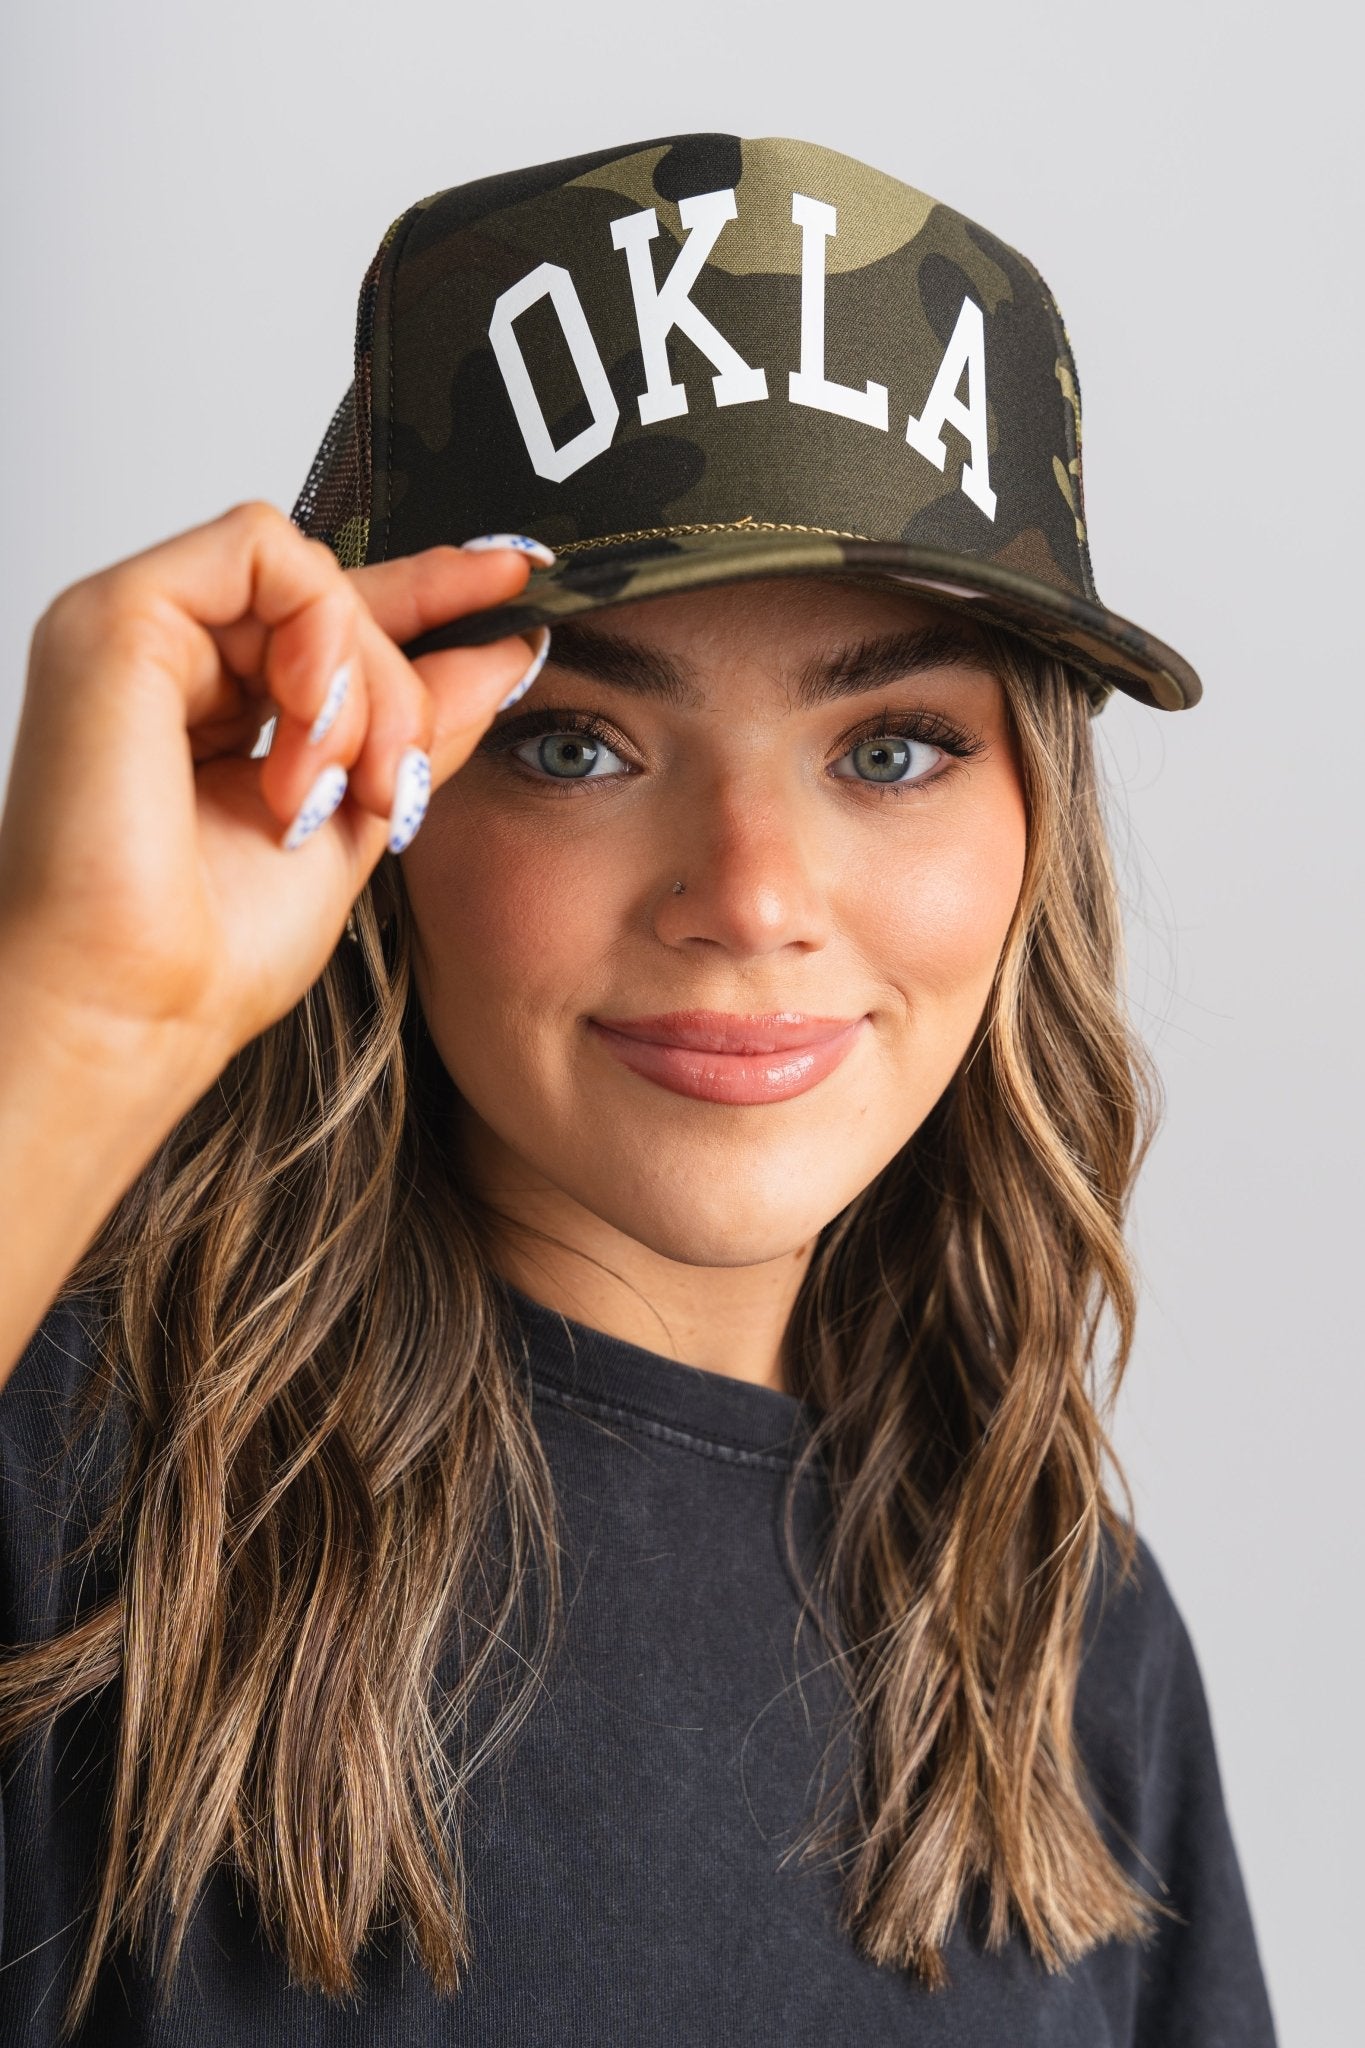 OKLA full camo trucker hat - Trendy Hats at Lush Fashion Lounge Boutique in Oklahoma City